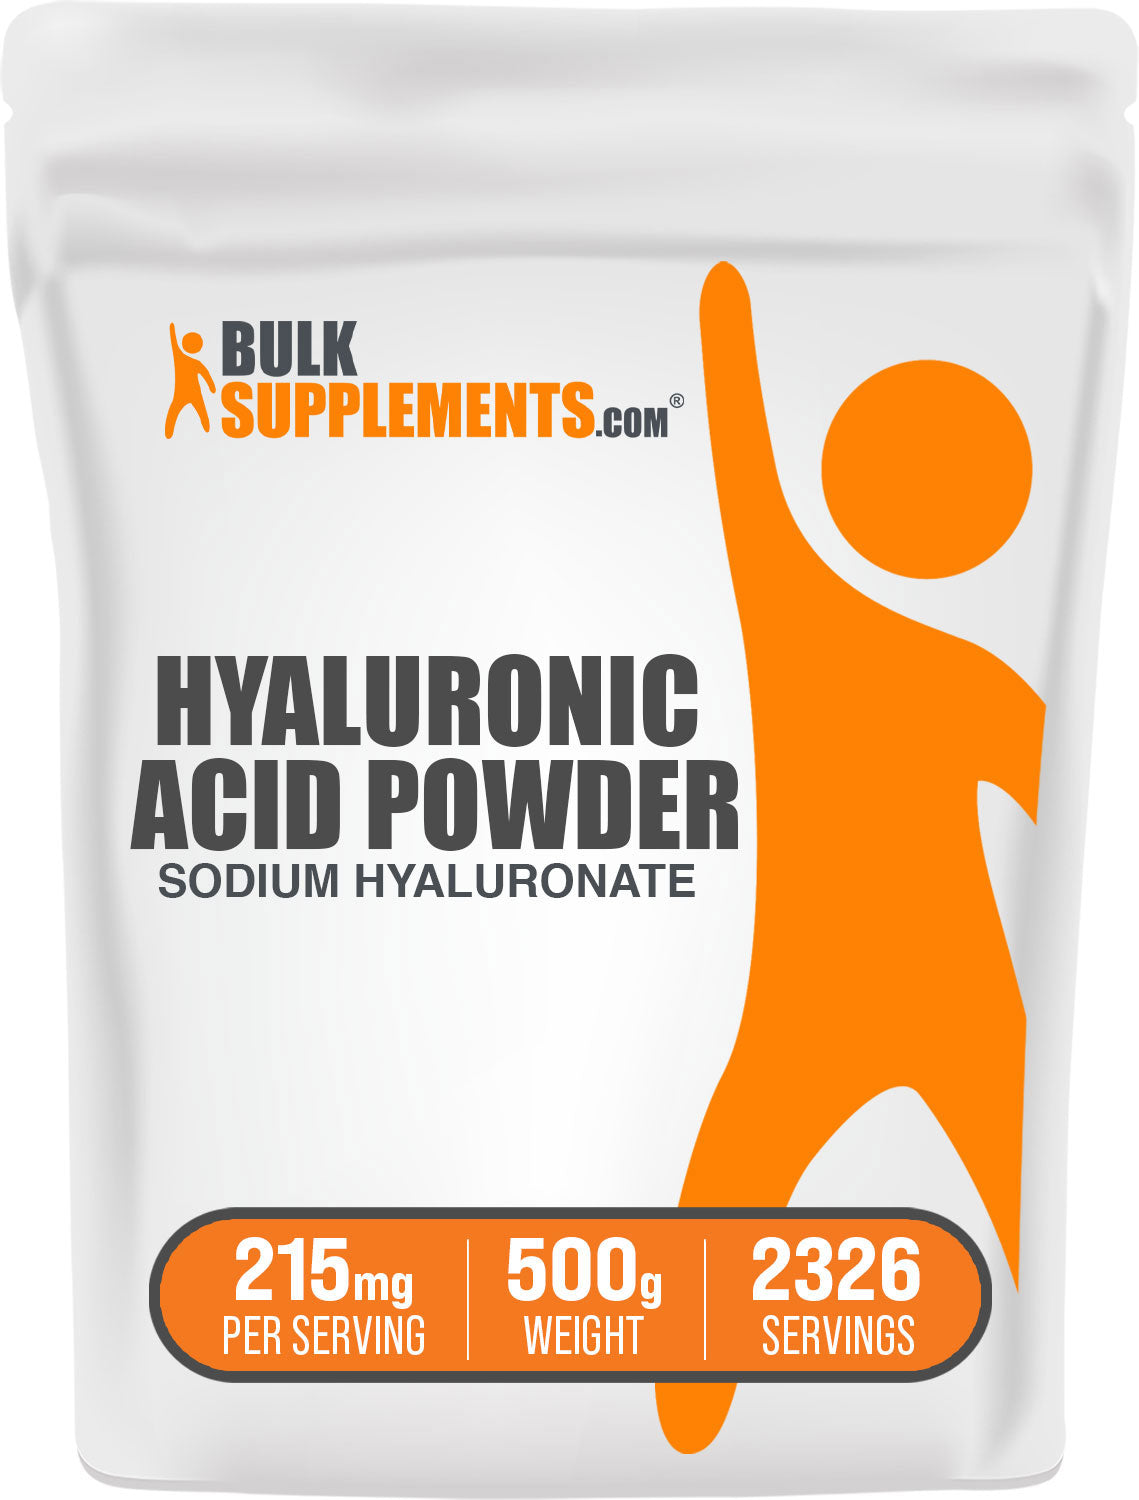 Hyaluronic Acid Powder 500g